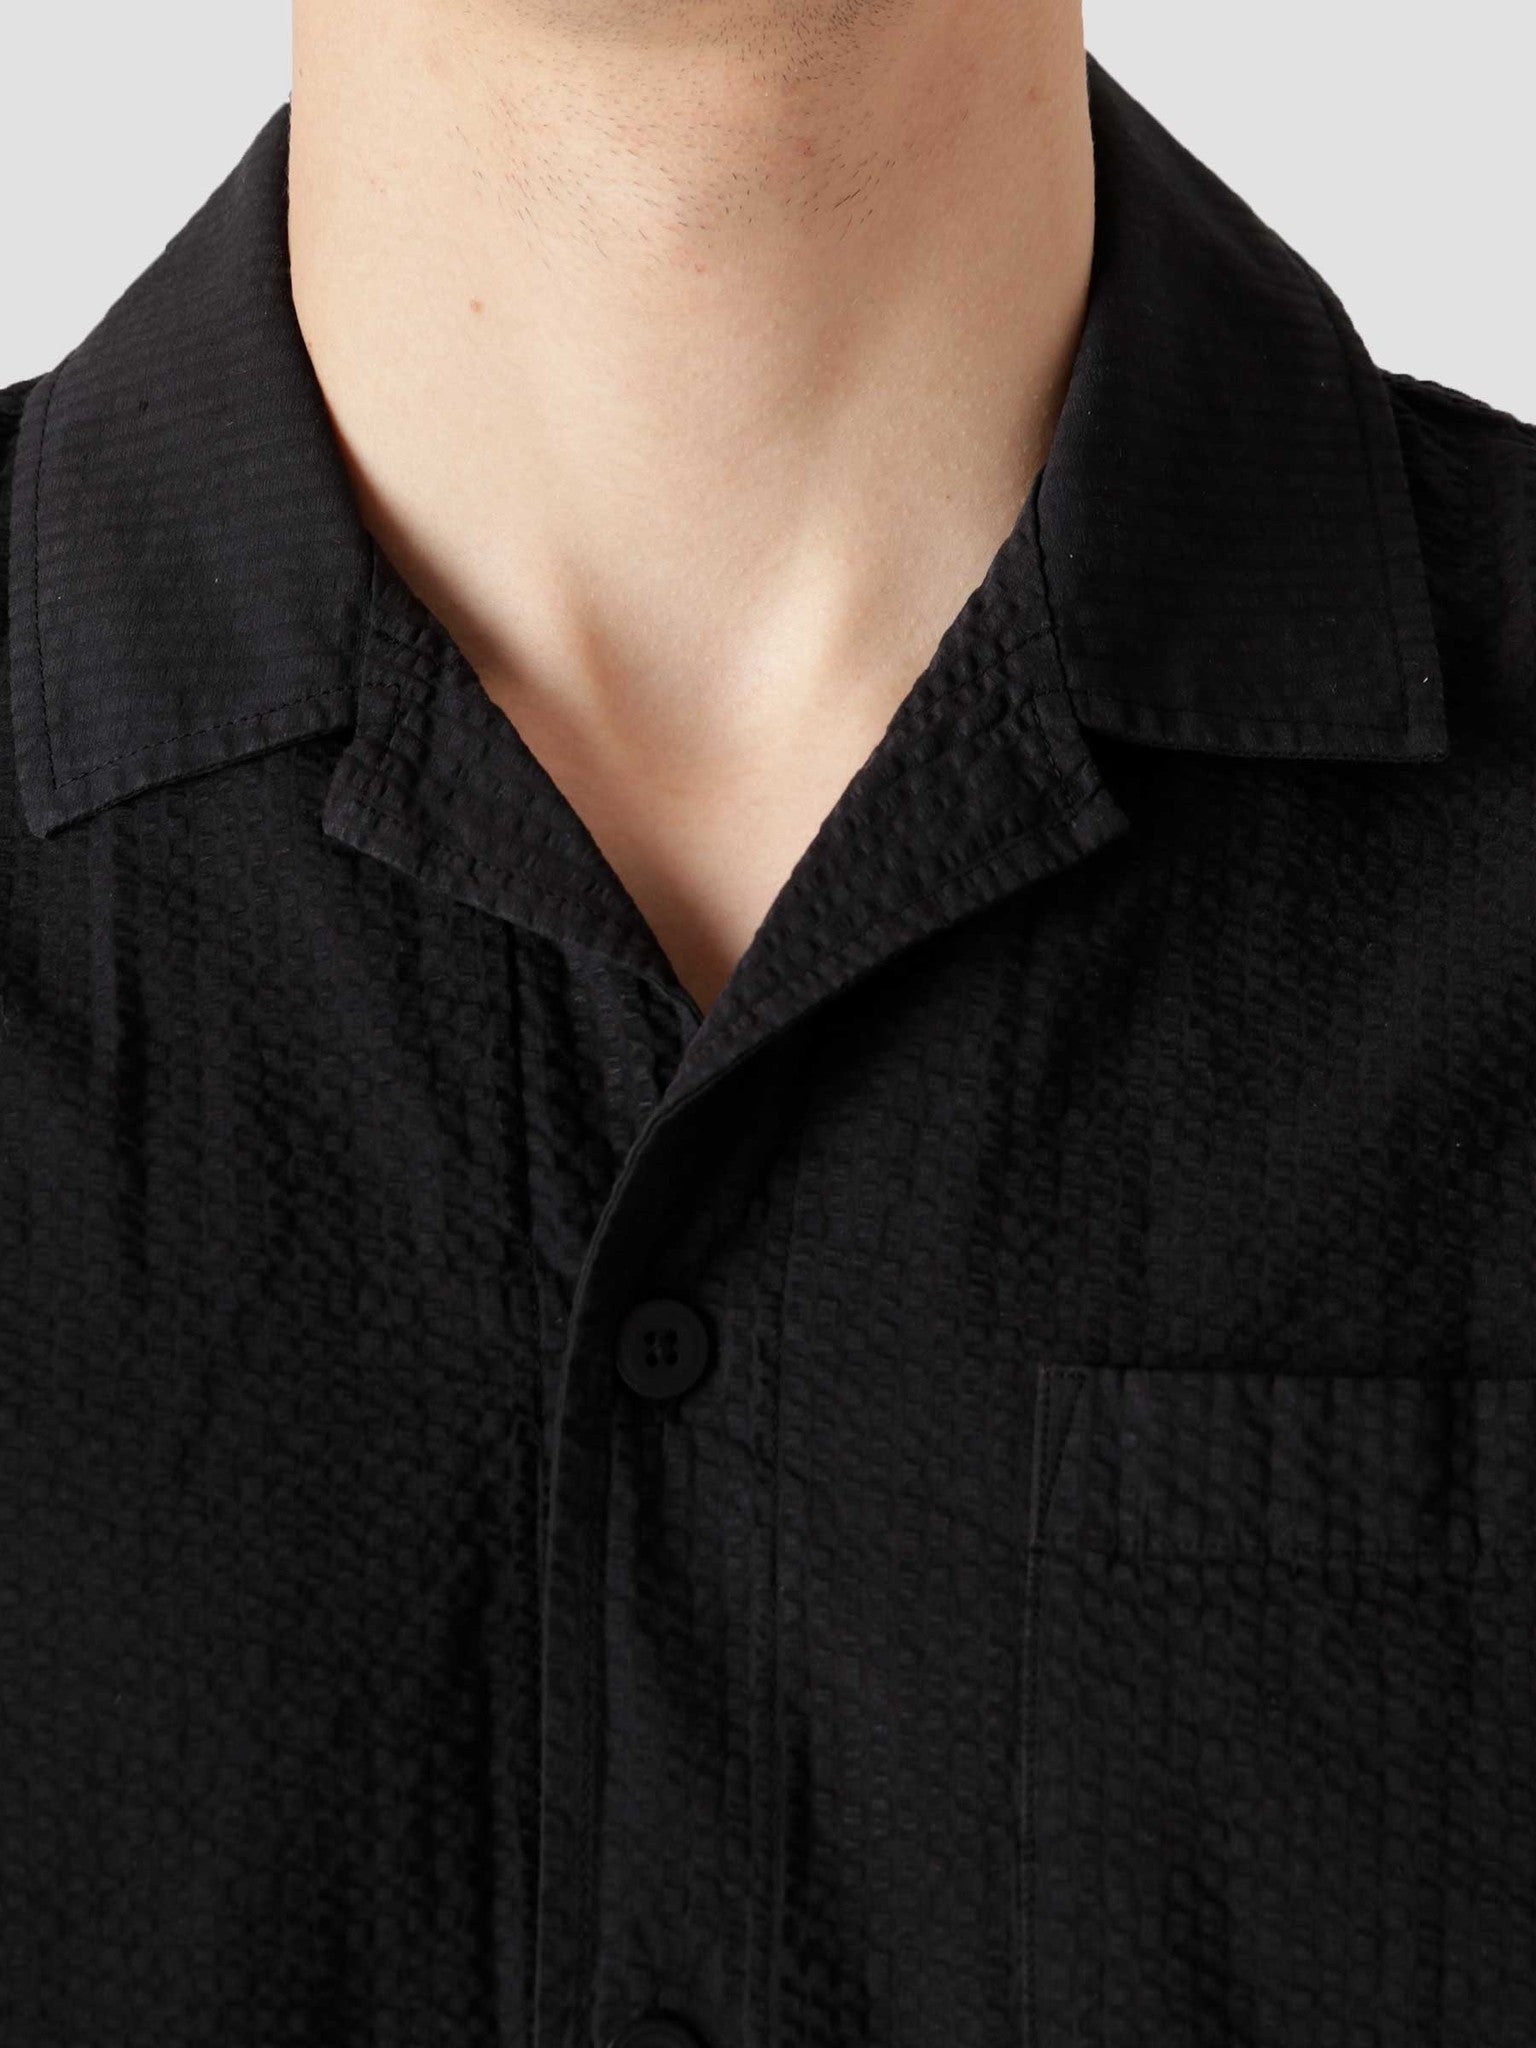 QB46 Seersucker Shirt Black